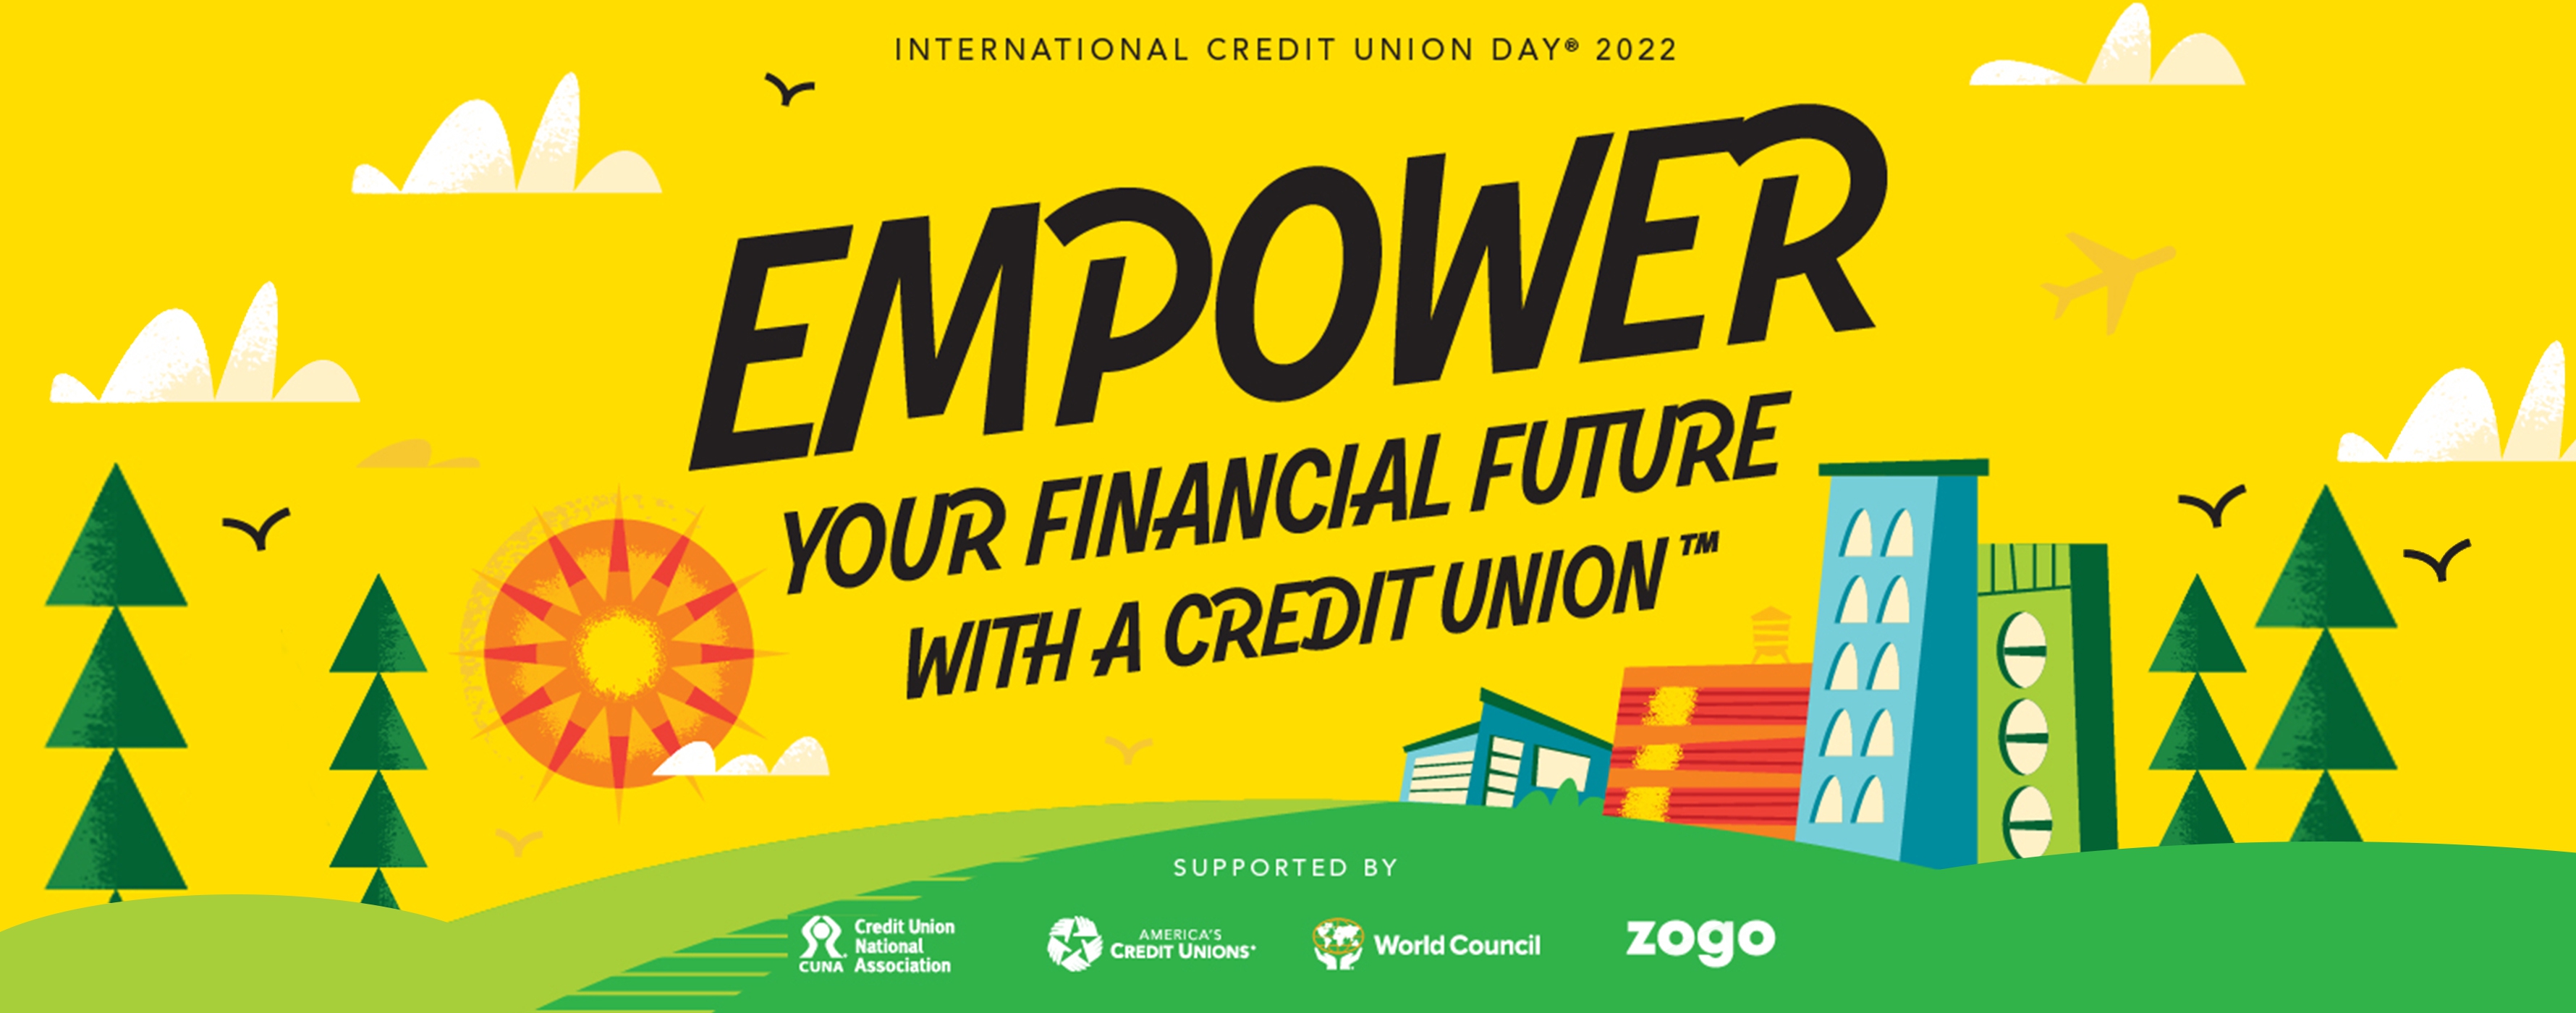 Celebrating International Credit Union Day